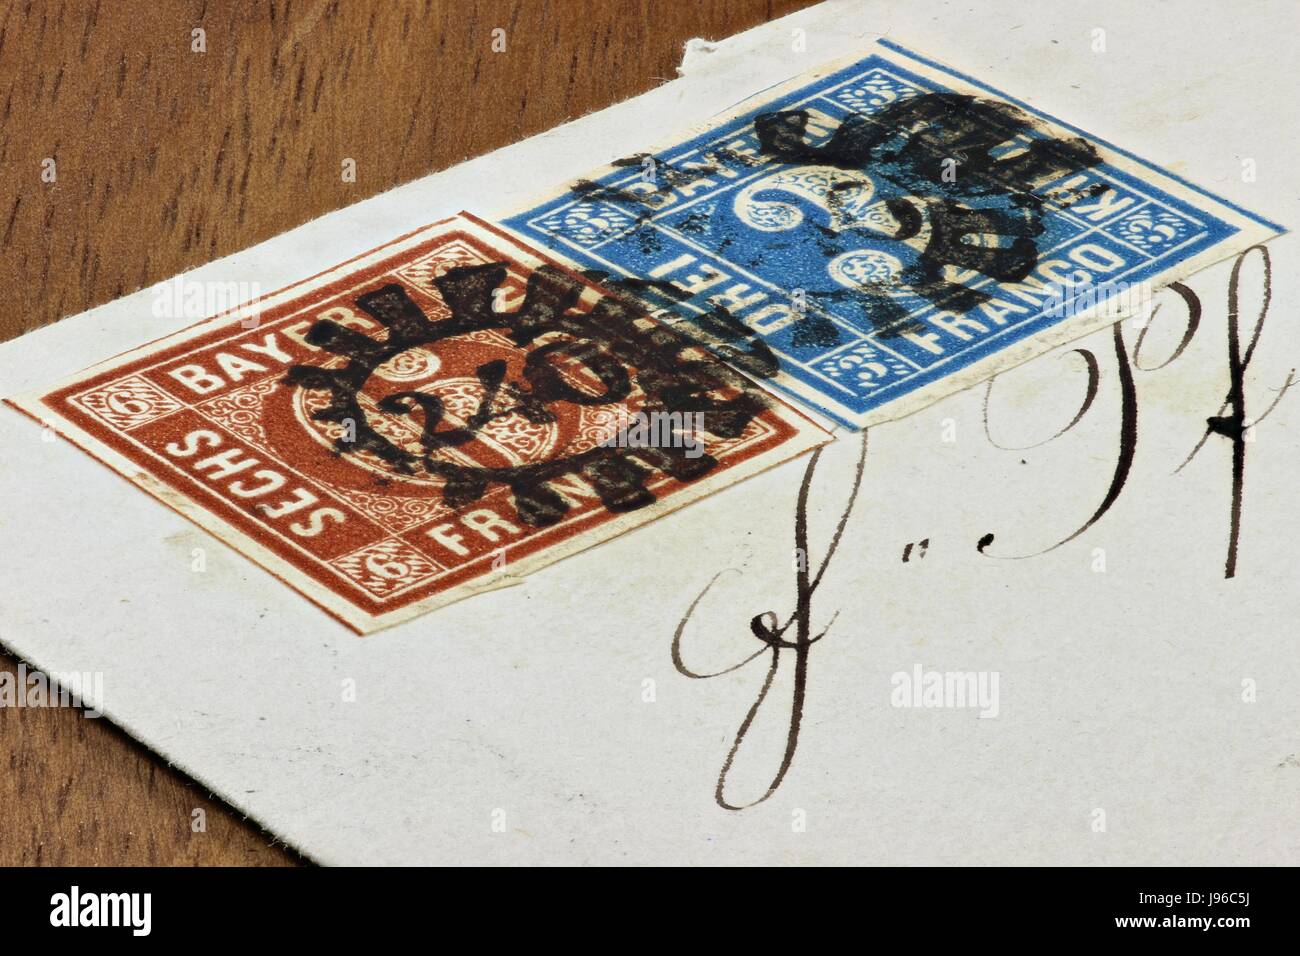 2 Bavarian Kreuzer stamps on envelope Stock Photo